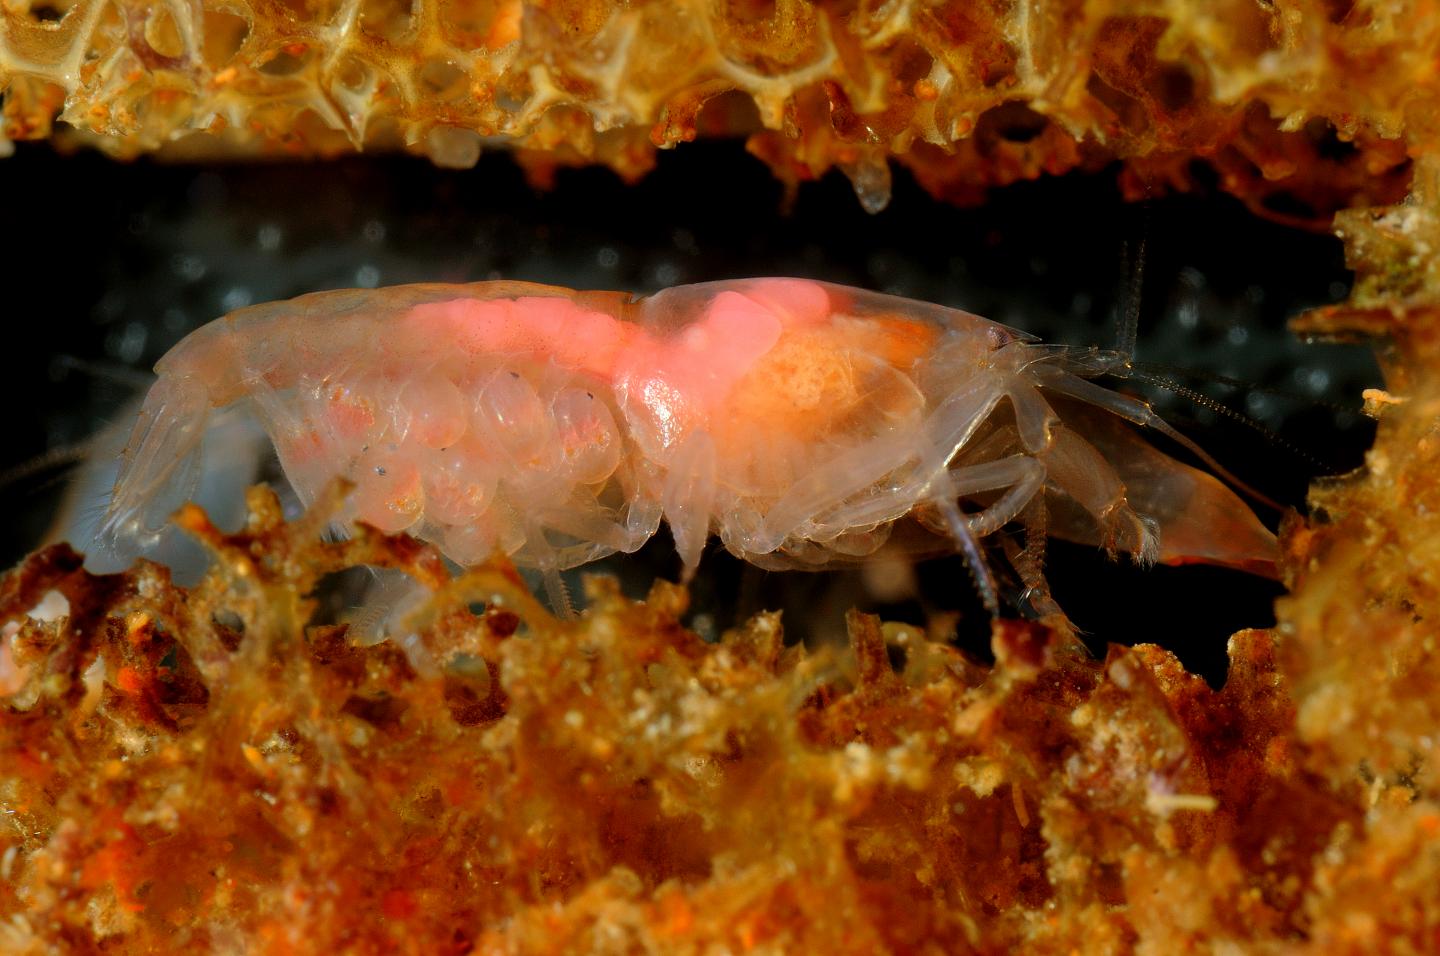 Snapping shrimp, Synalpheus